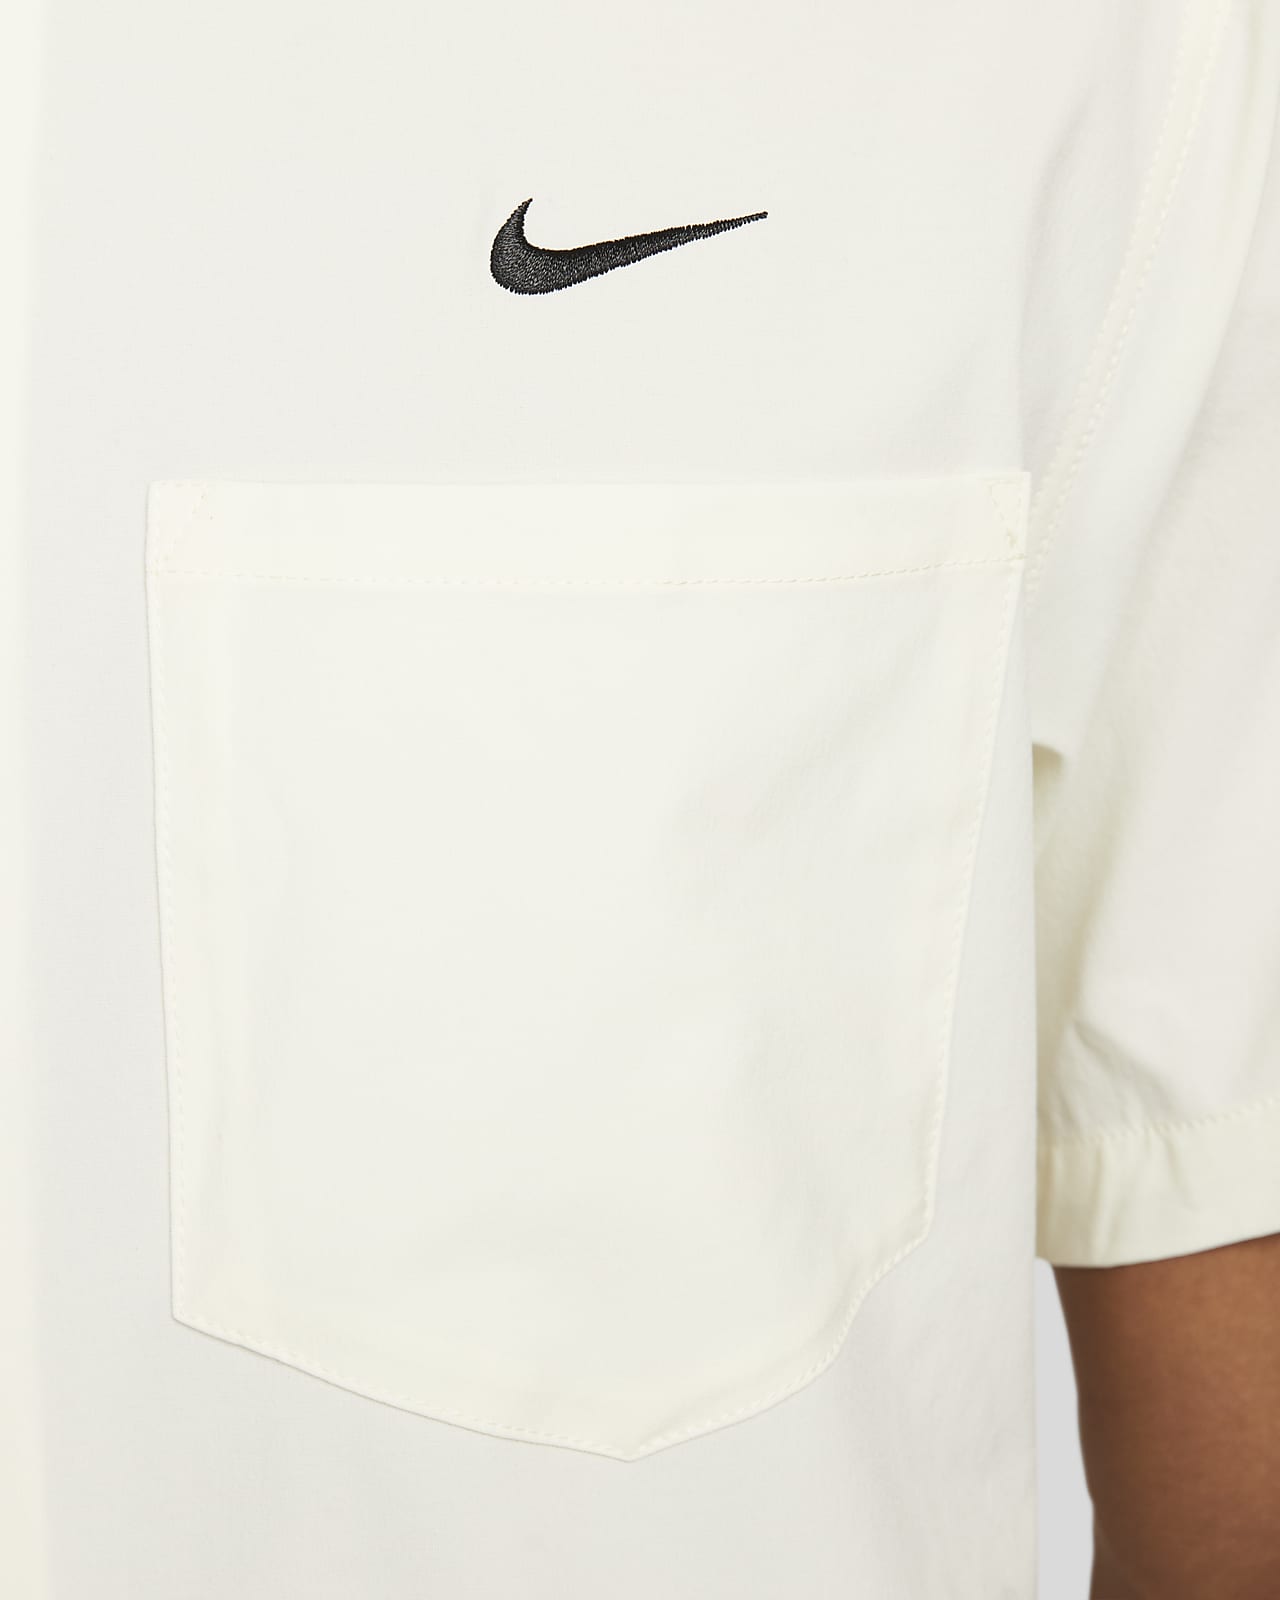 centavo Citar Pinchazo Nike SB Camisa tipo bolera de skateboard de manga corta. Nike ES